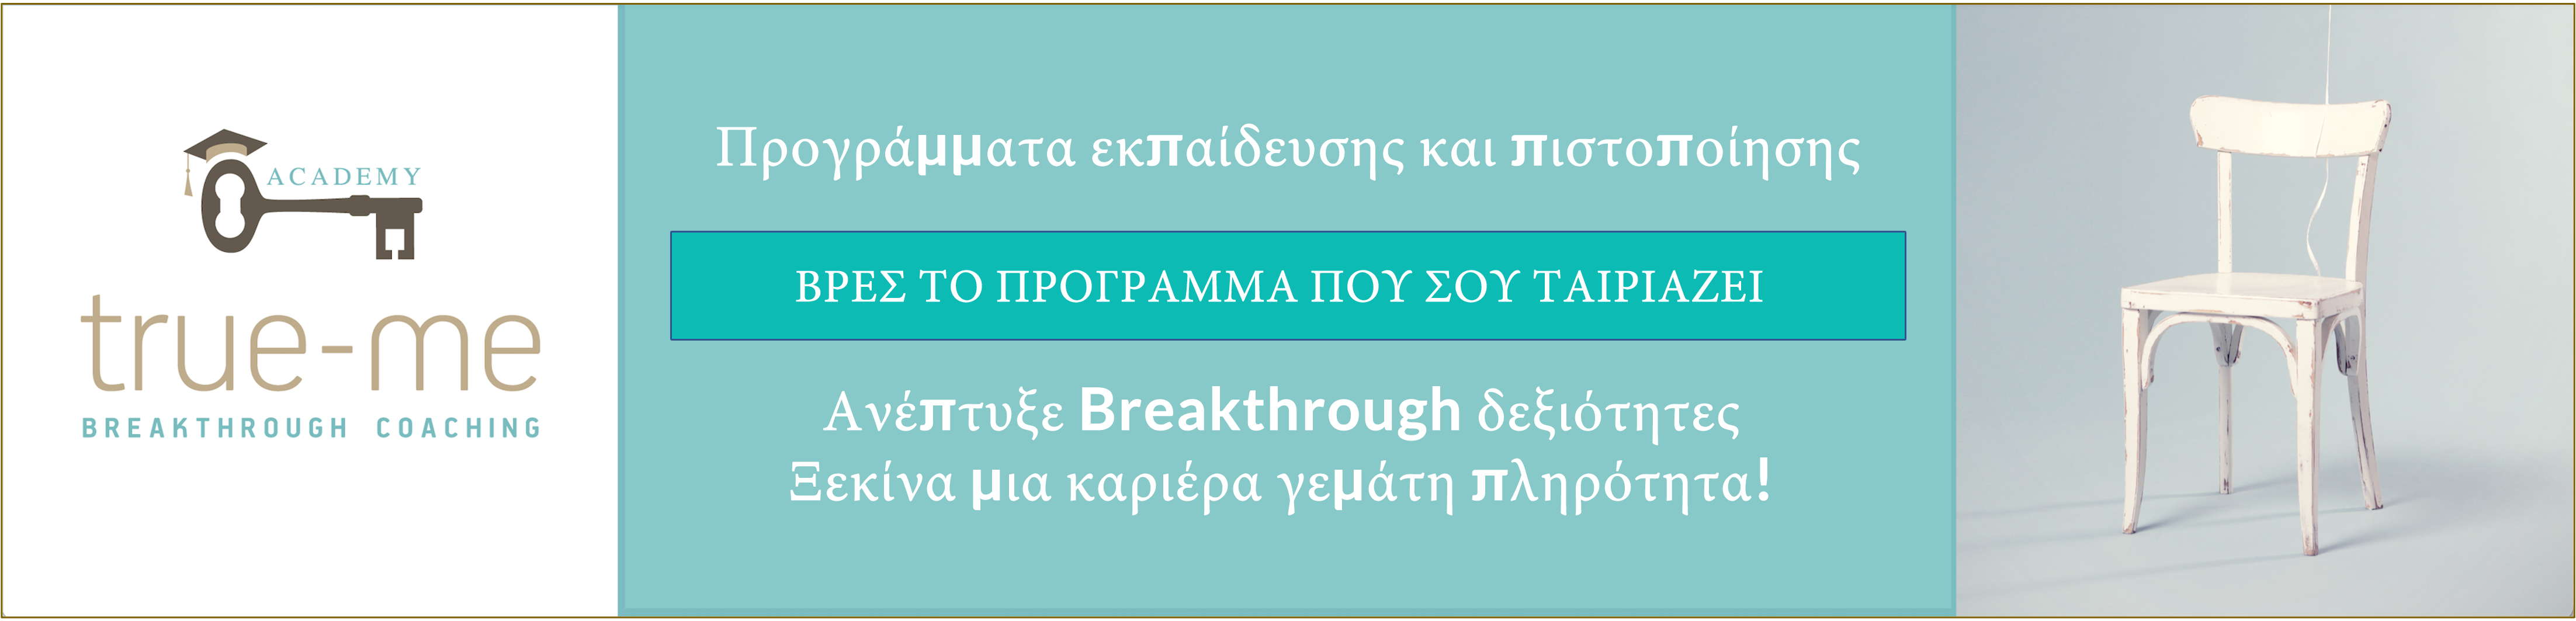 ACADEMY_ANNOUNCEMENT greek